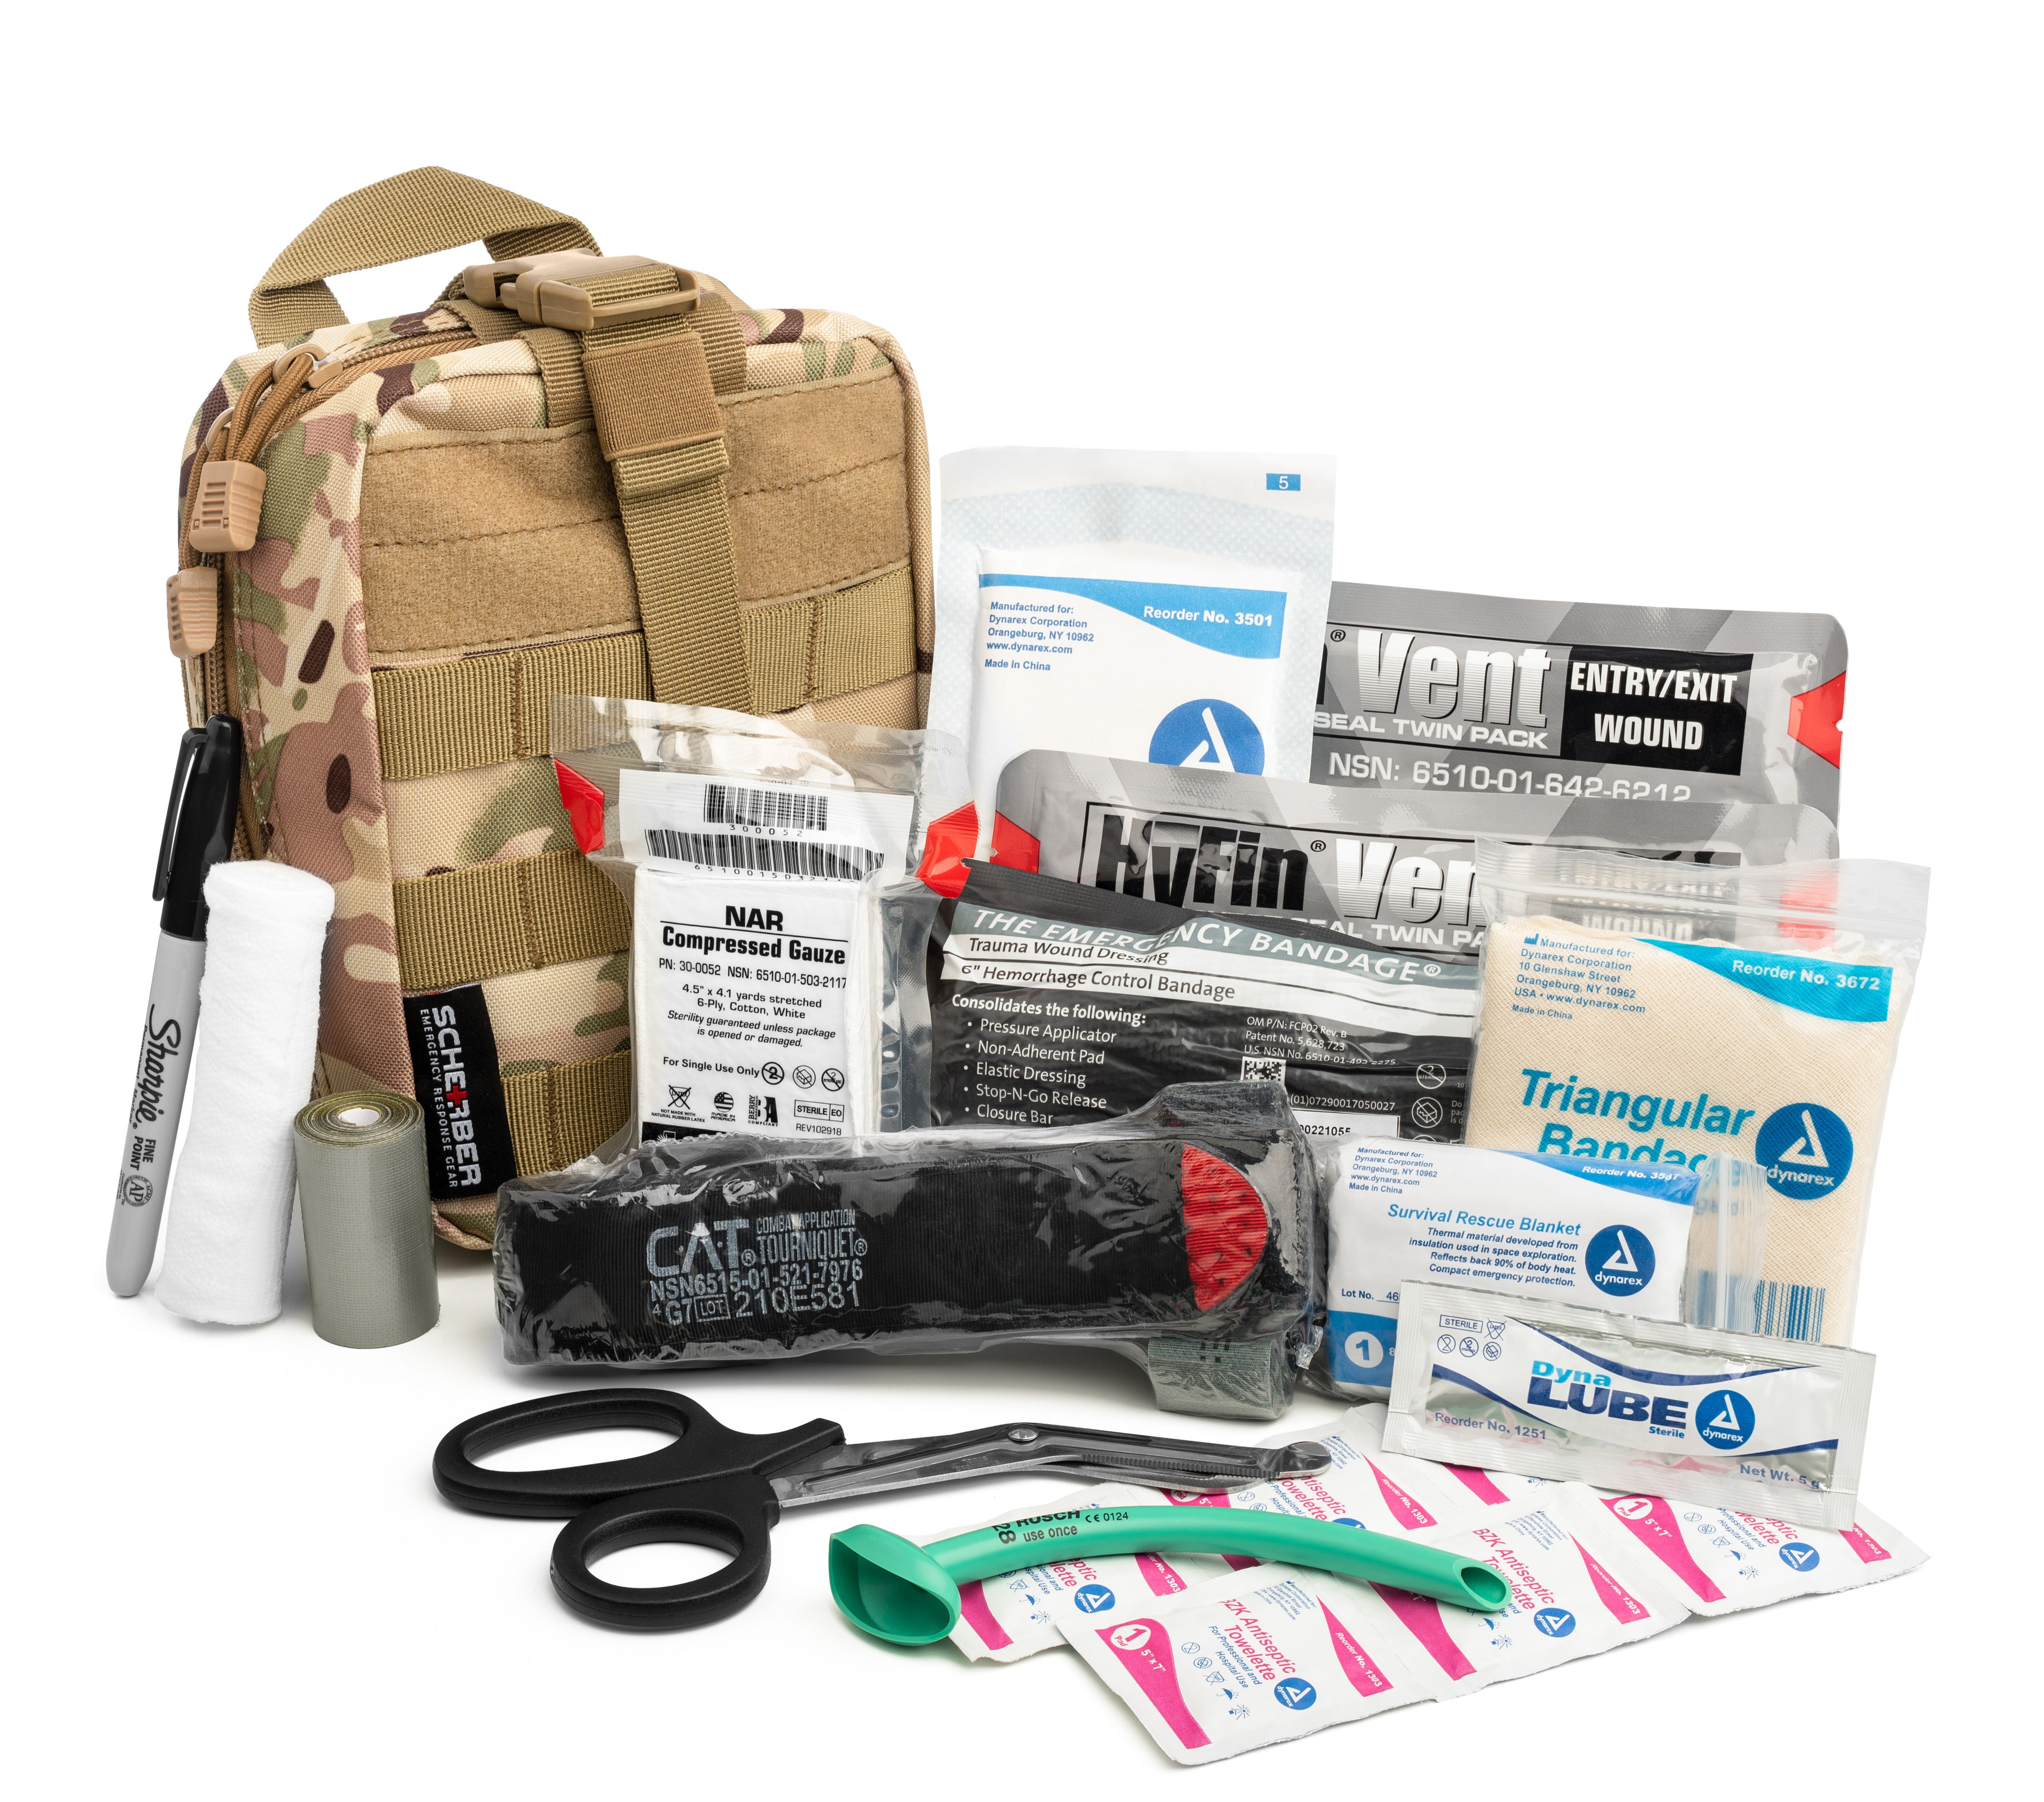 Scherber Premium IFAK Kit Trauma Pack | Fully Stocked Molle Pouch w/Cat Tourniquet, Hyfin Vent Chest Seal, & Israeli Bandage | Trauma Kit for